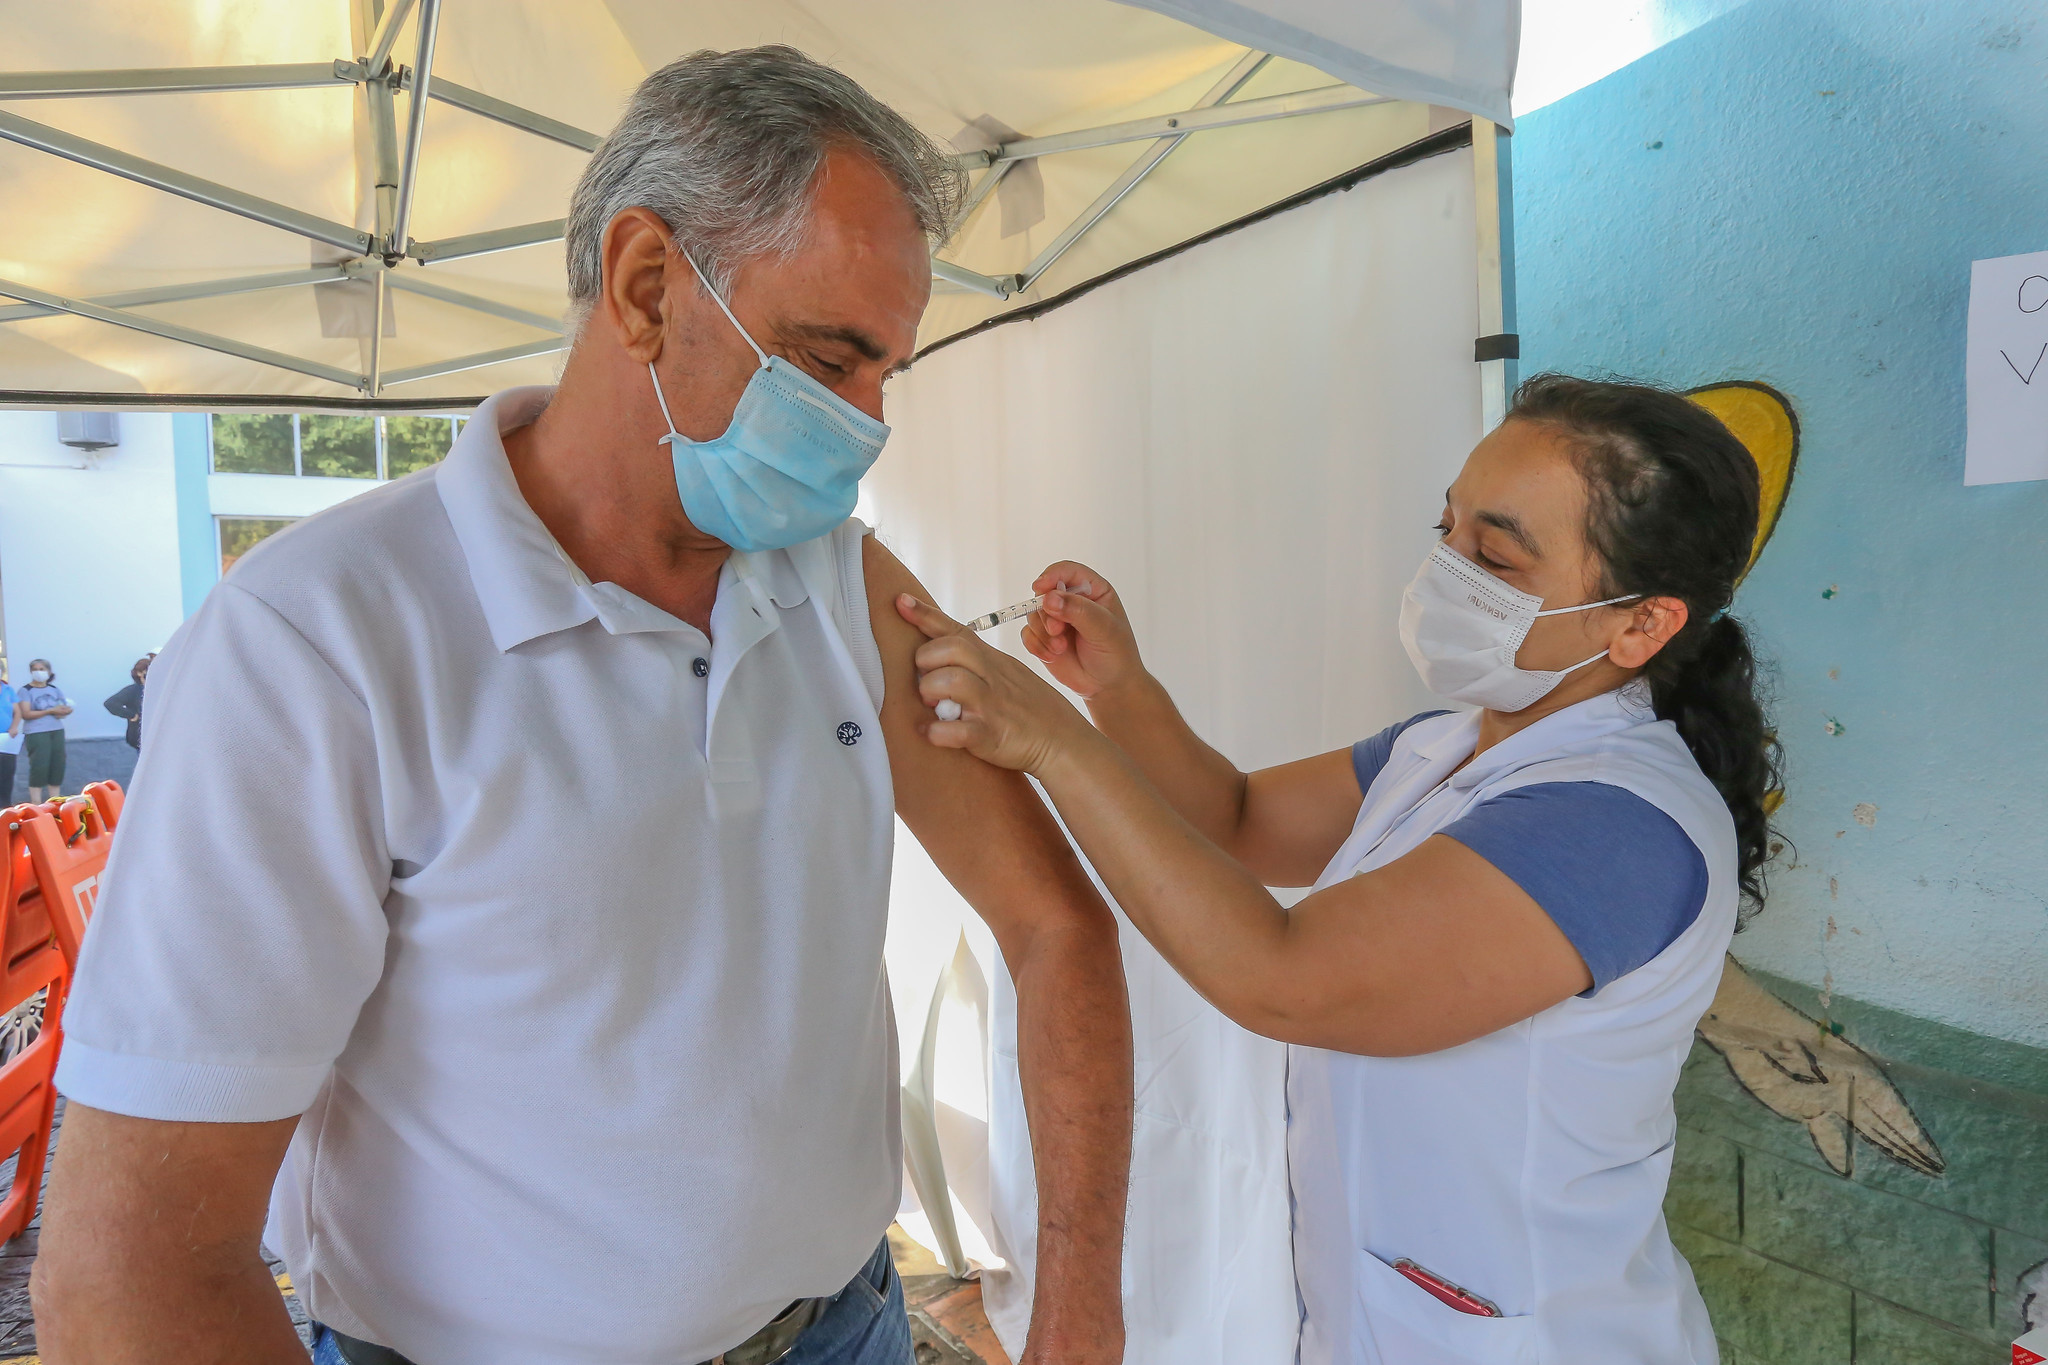 Vaccination against Covid-19 in São Paulo